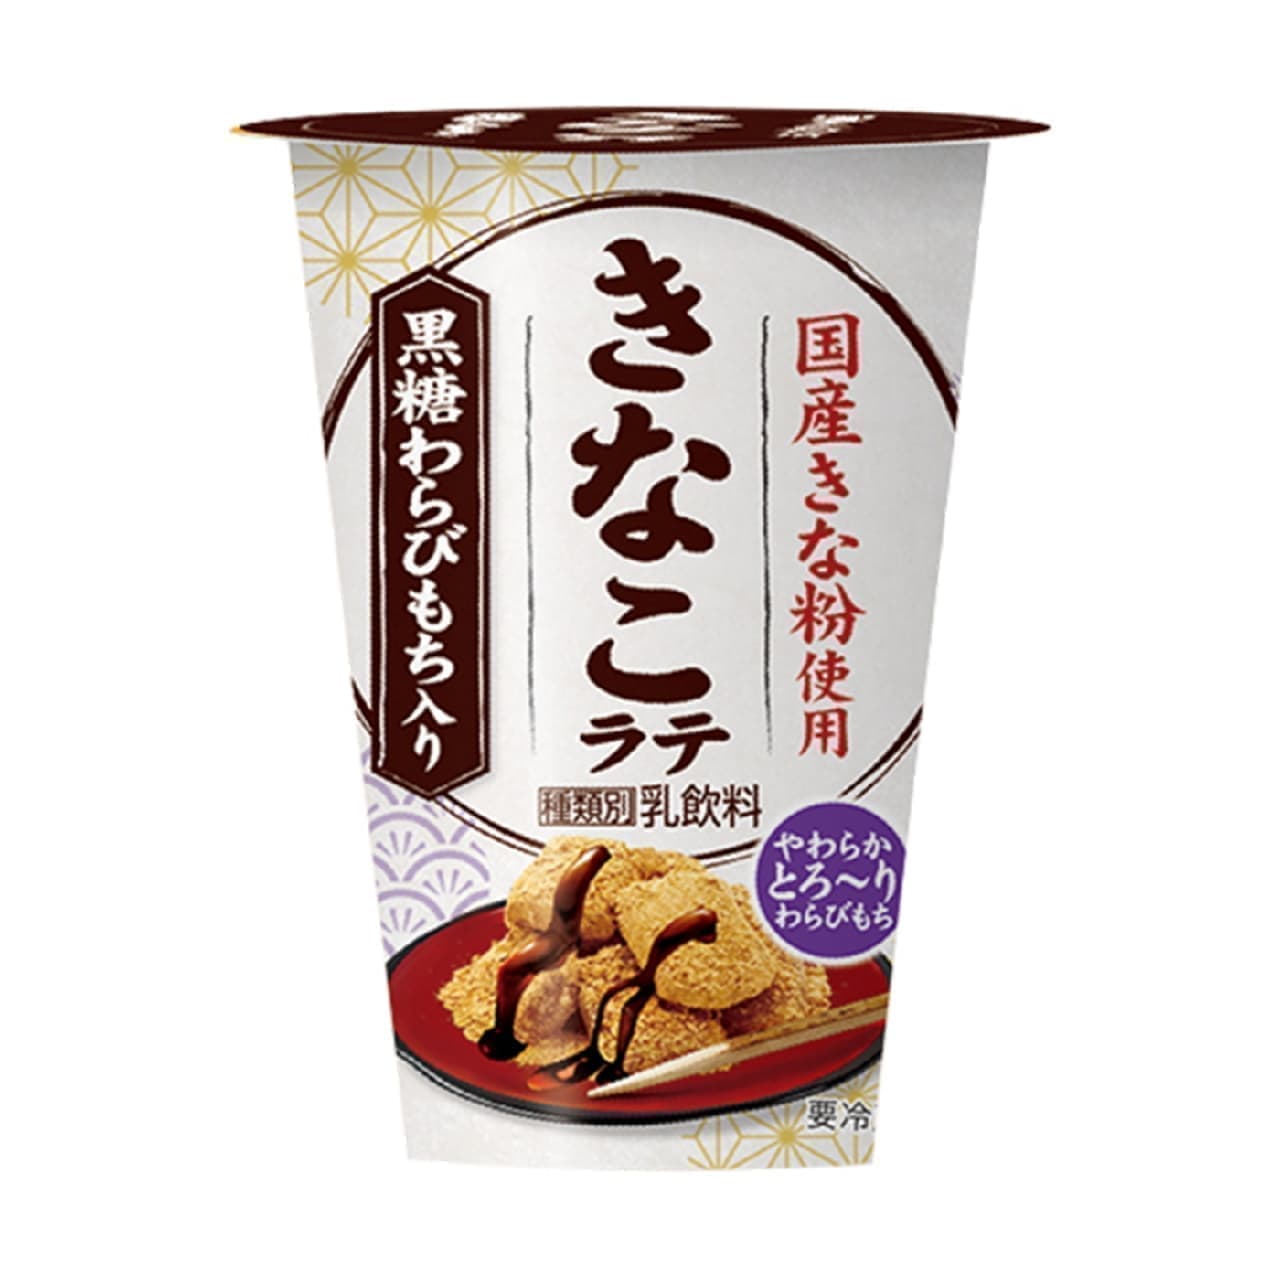 Famima "Kinako Latte" (soybean flour latte)